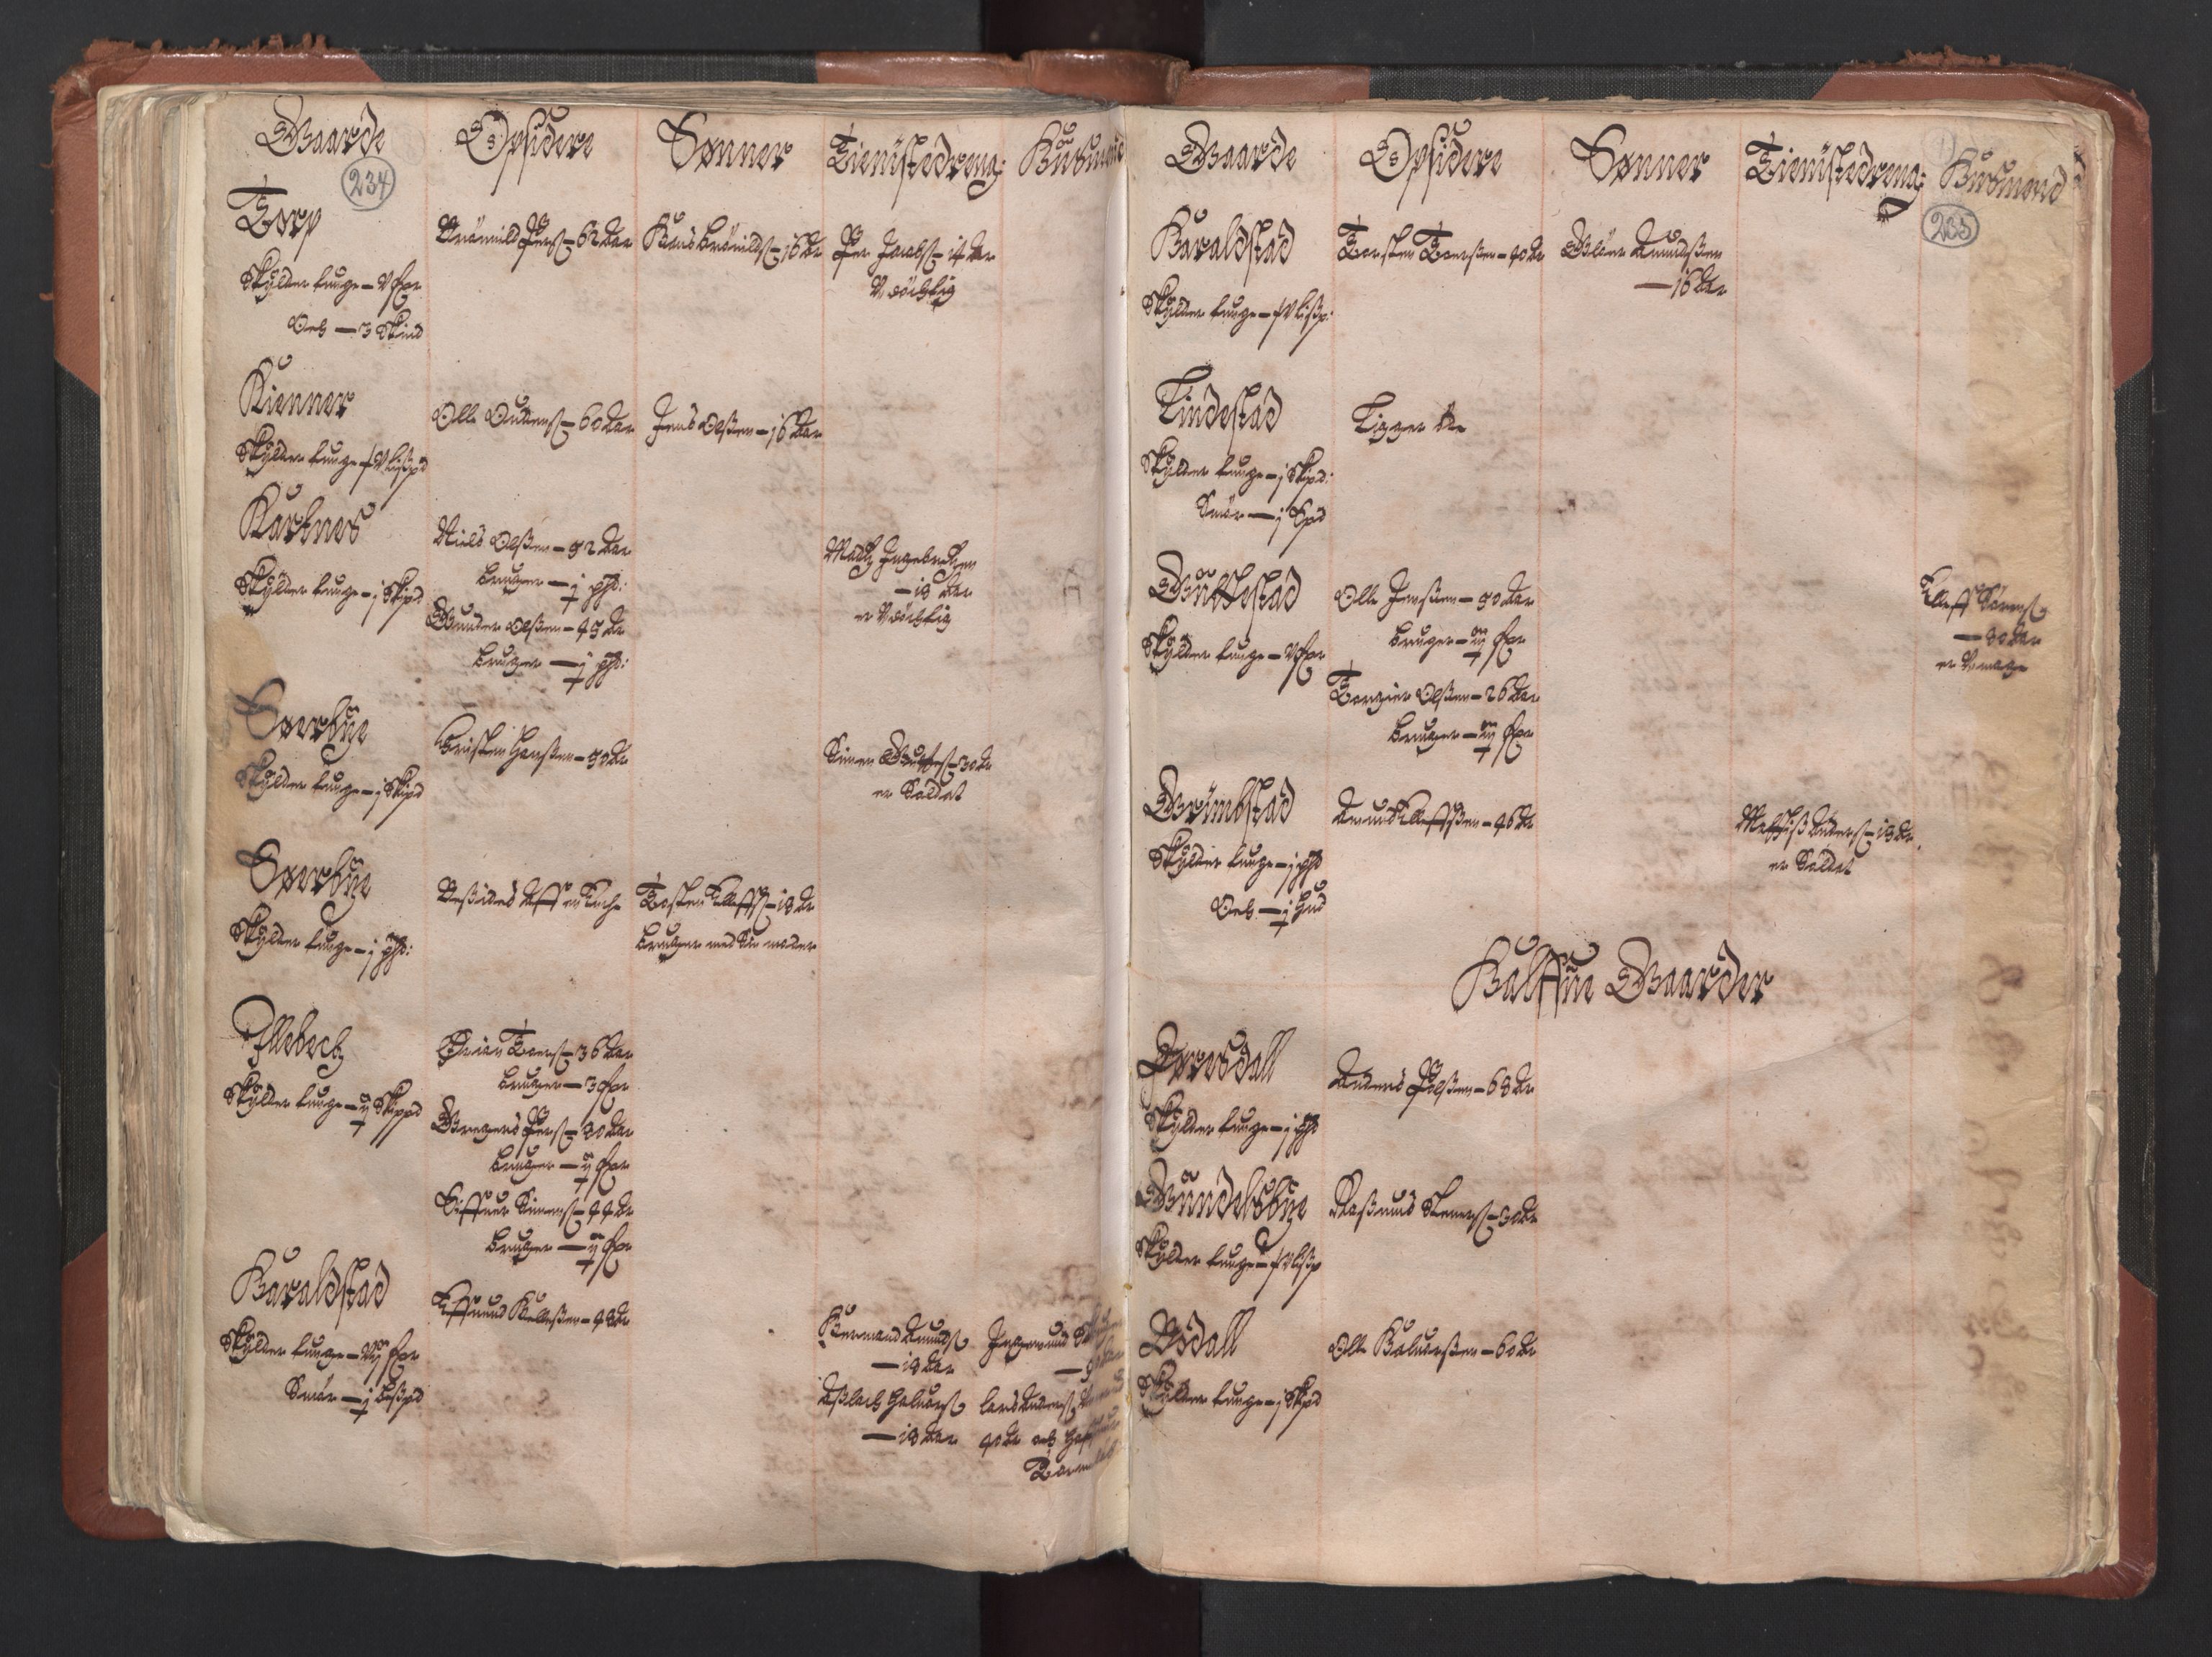 RA, Fogdenes og sorenskrivernes manntall 1664-1666, nr. 1: Fogderier (len og skipreider) i nåværende Østfold fylke, 1664, s. 234-235